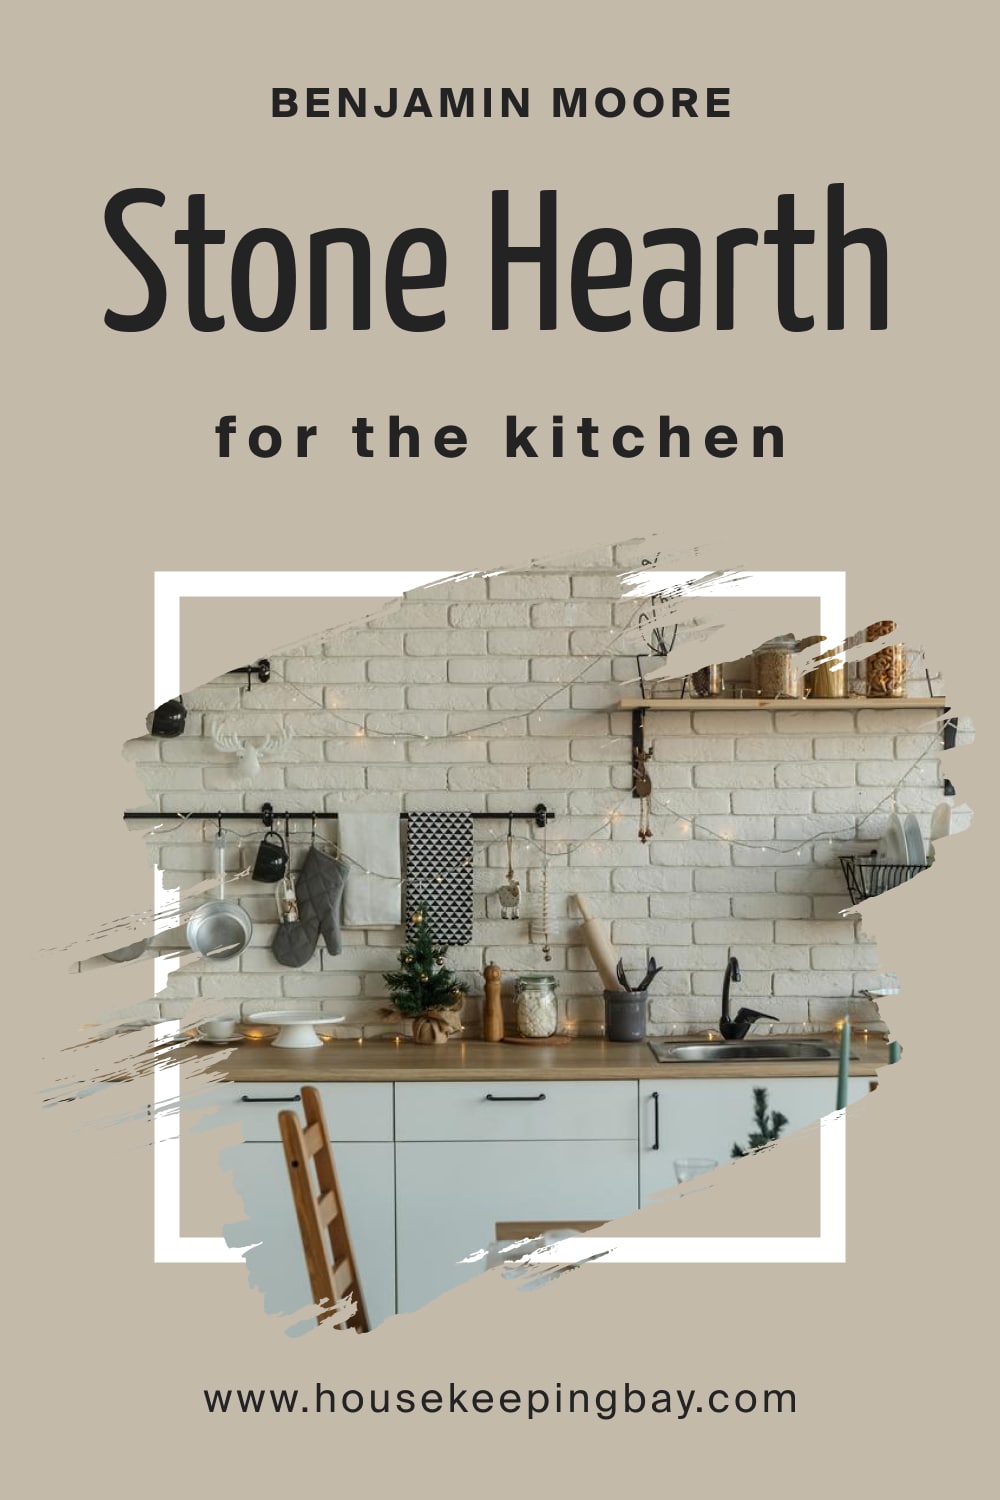 Stone Hearth 984 on the Kitchen